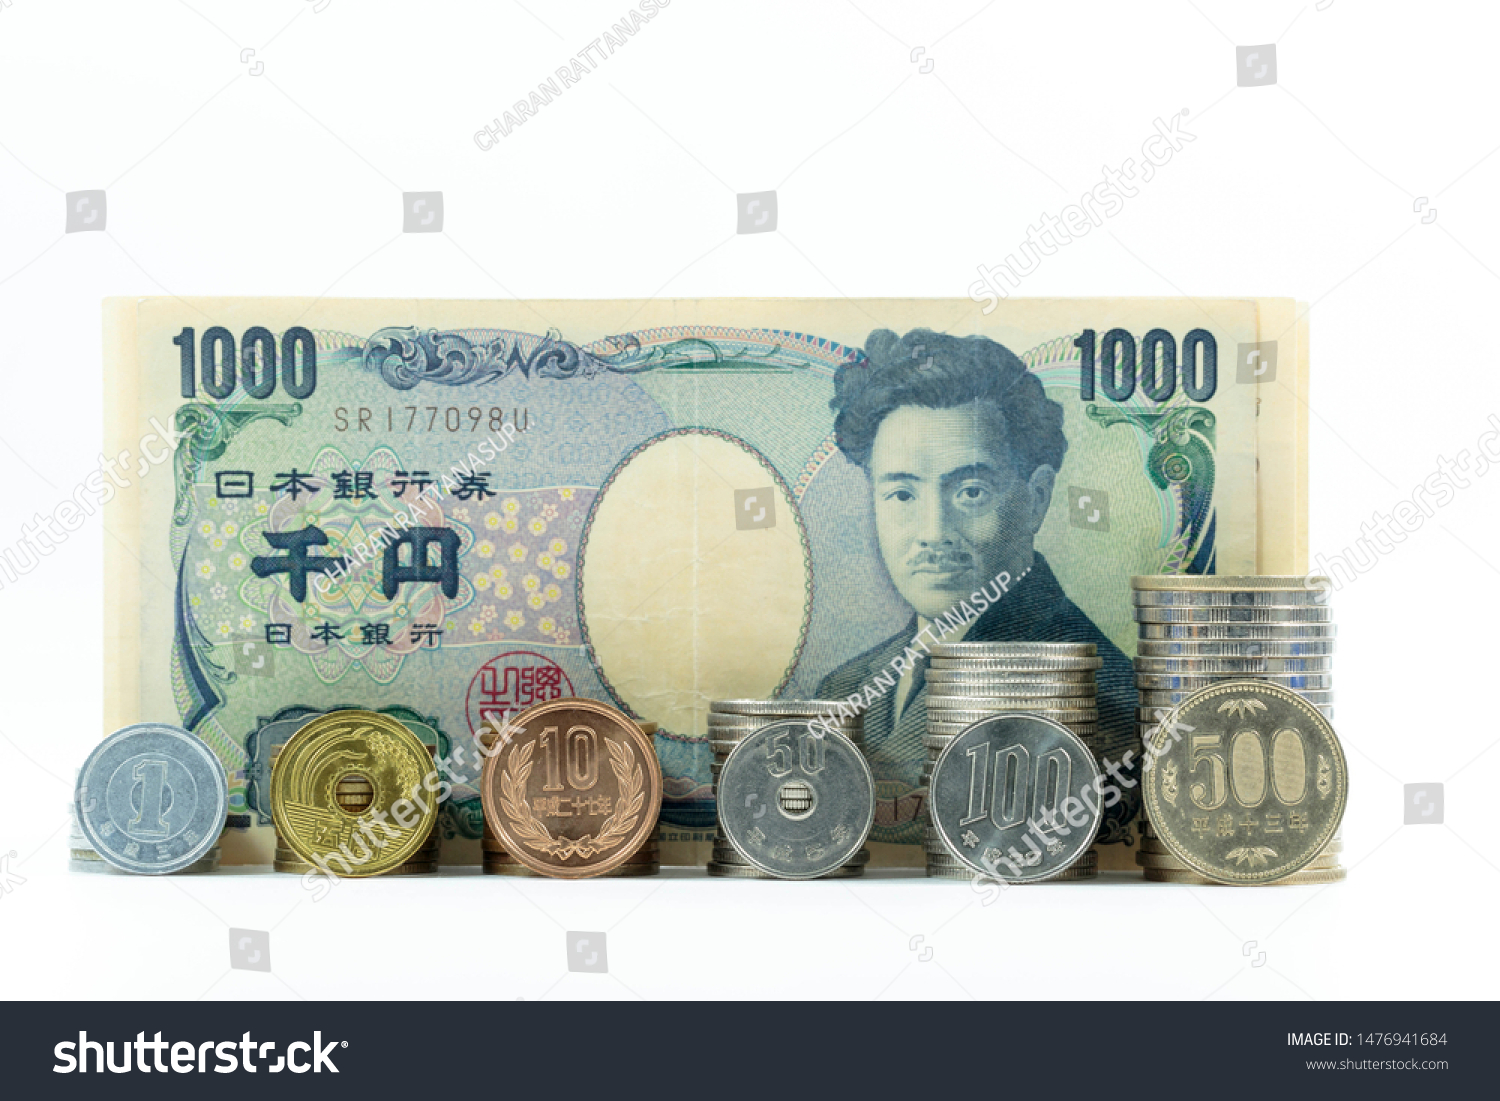 1,000 yen to myr